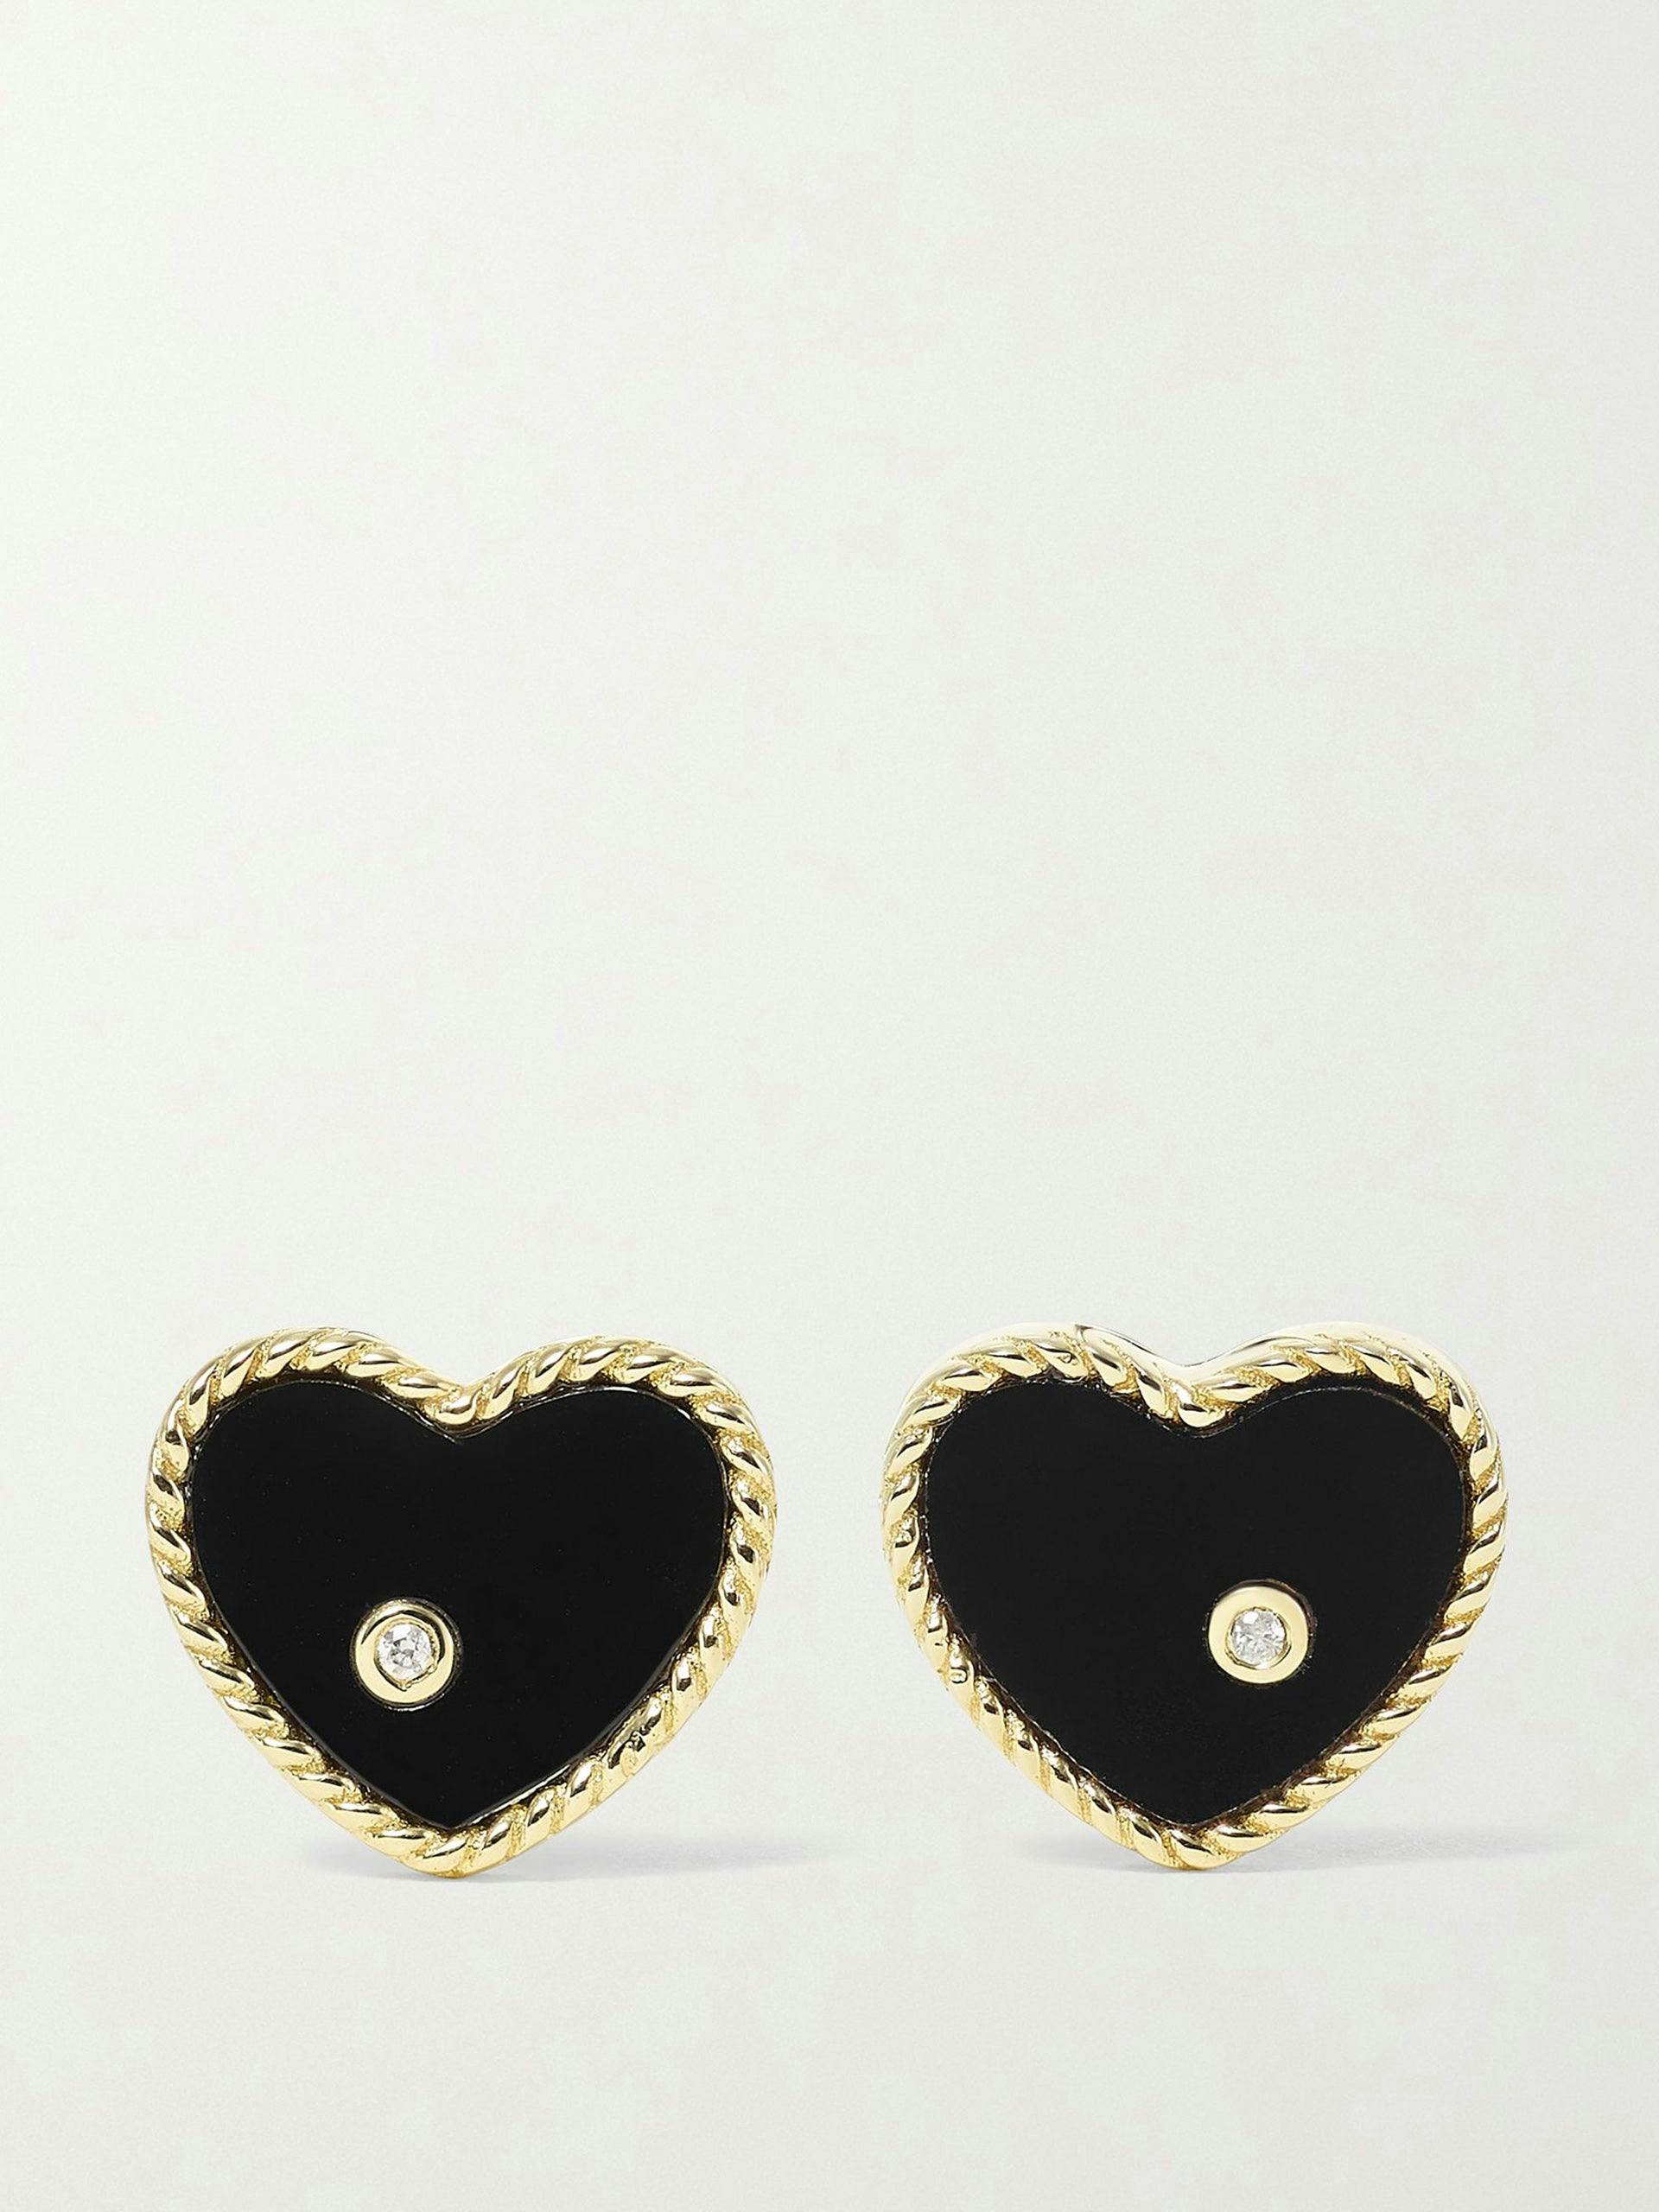 Baby Heart 9-karat gold, onyx and diamond earrings